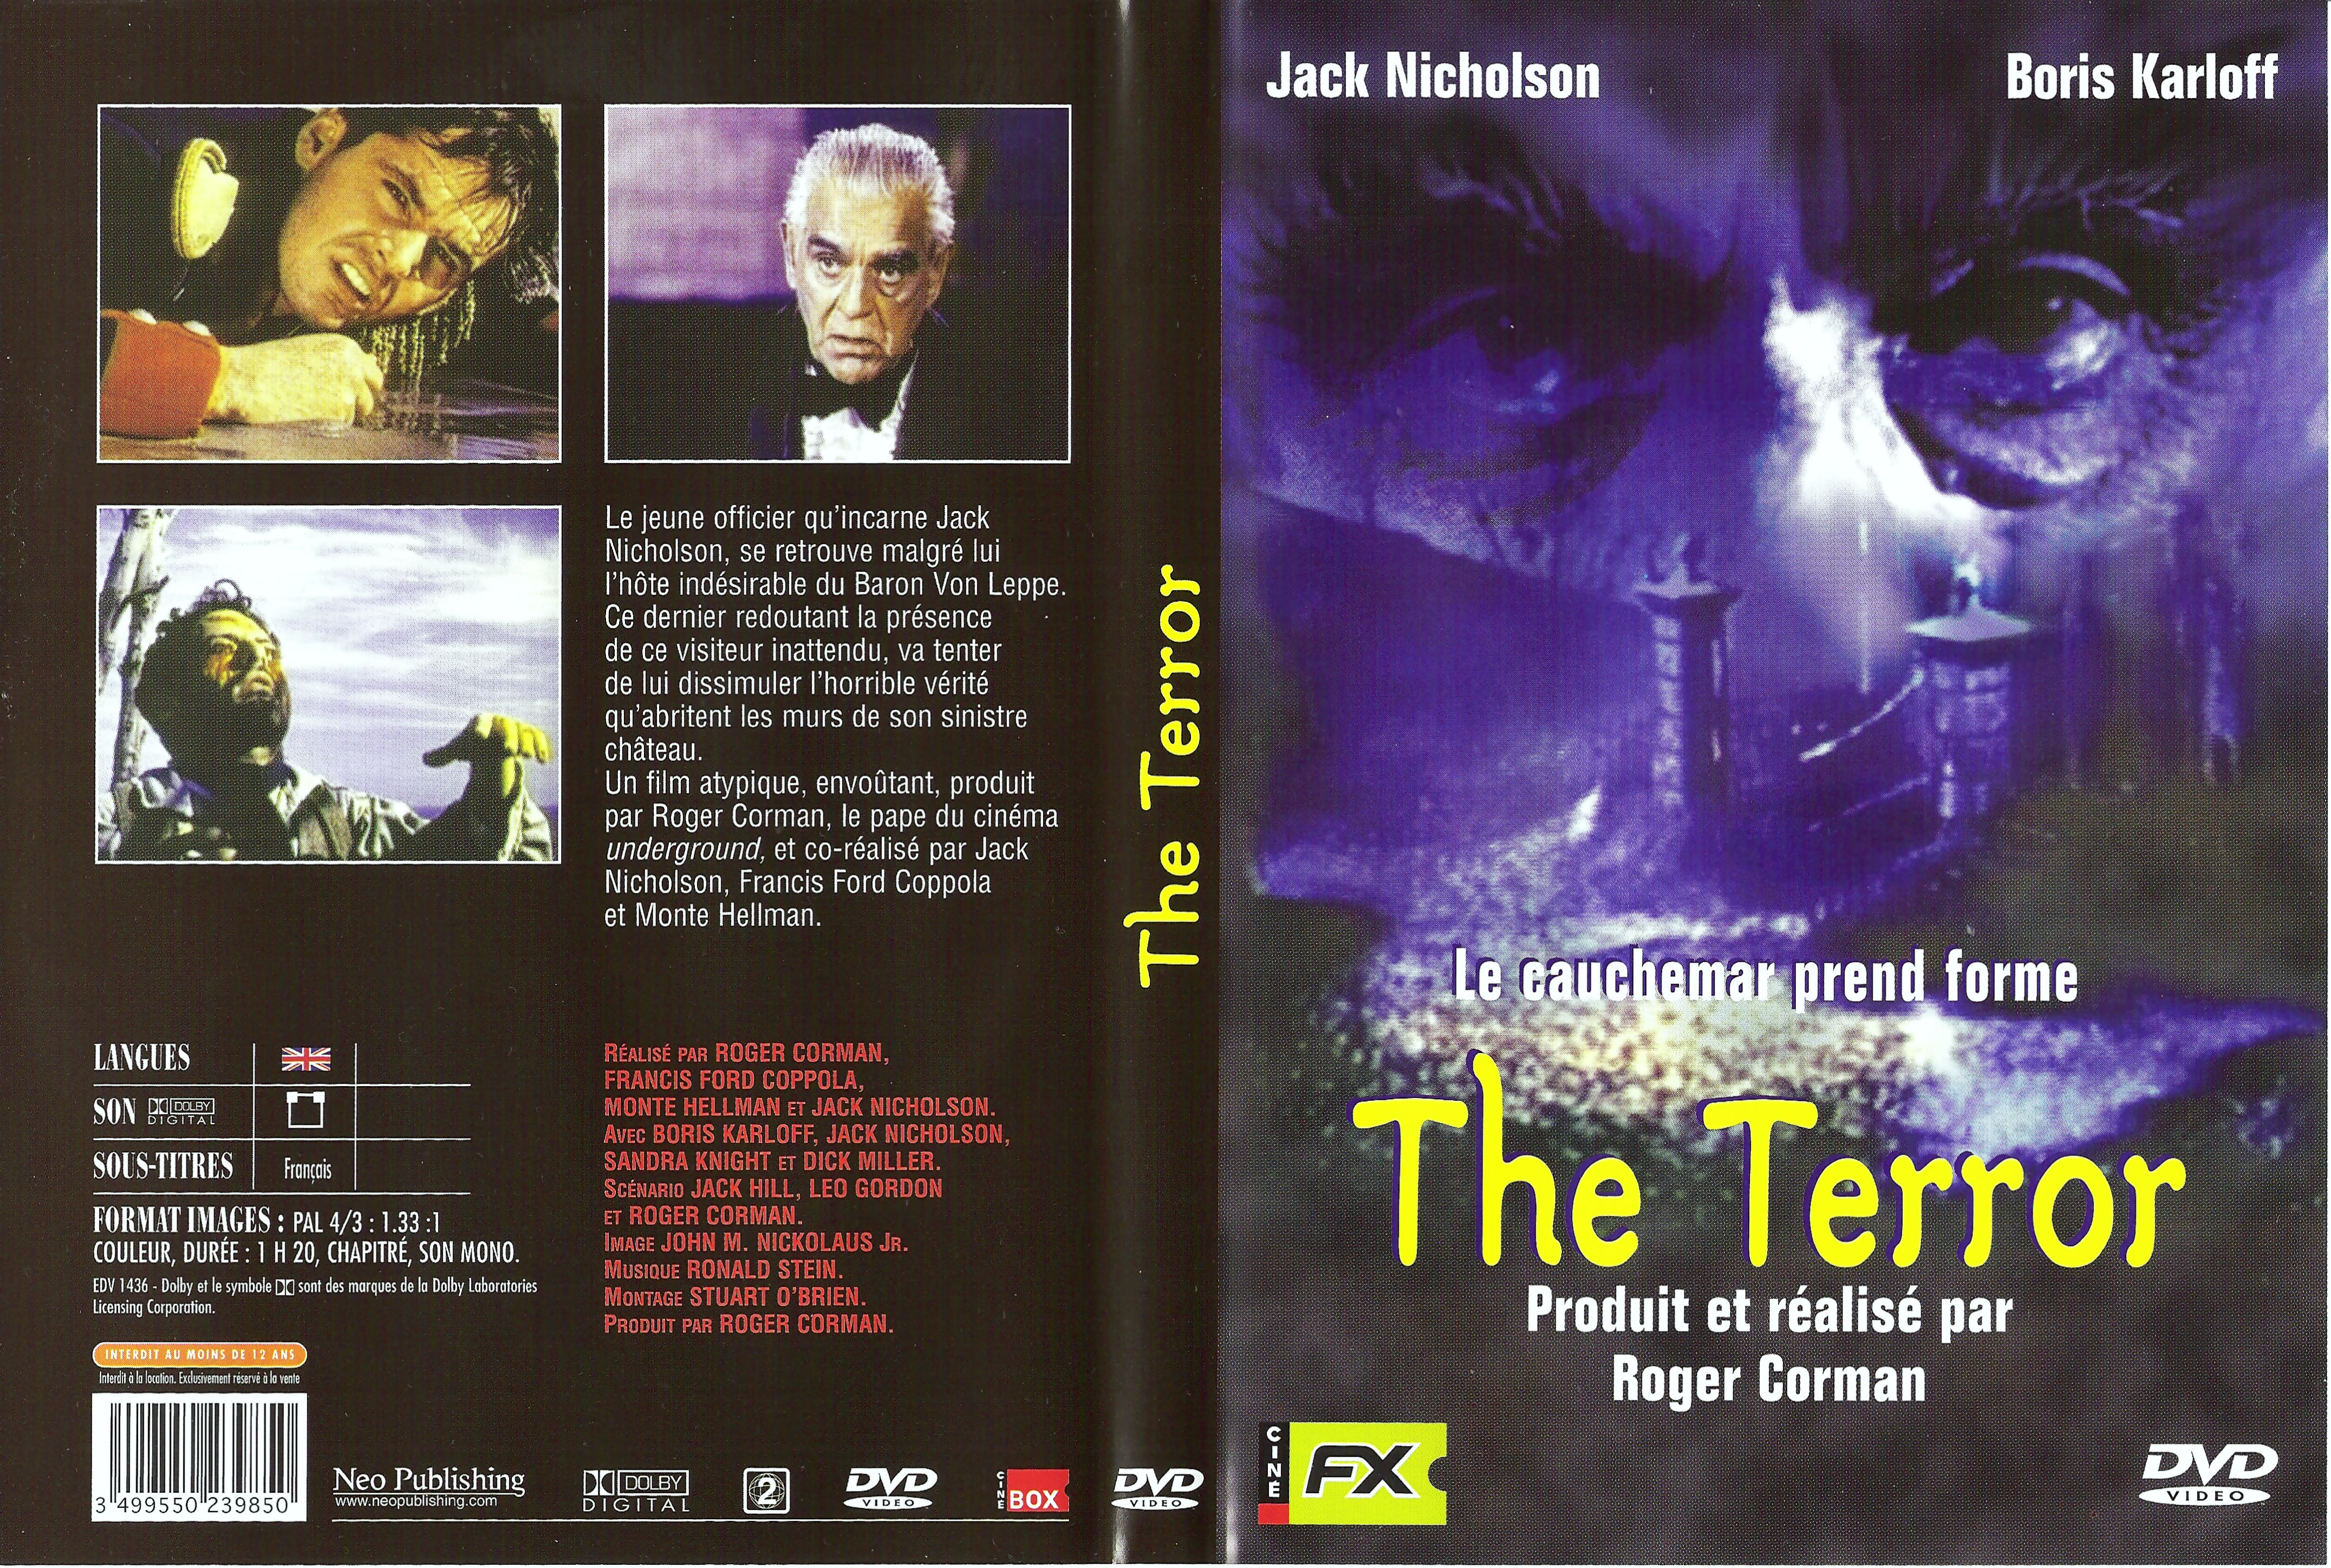 Jaquette DVD The terror